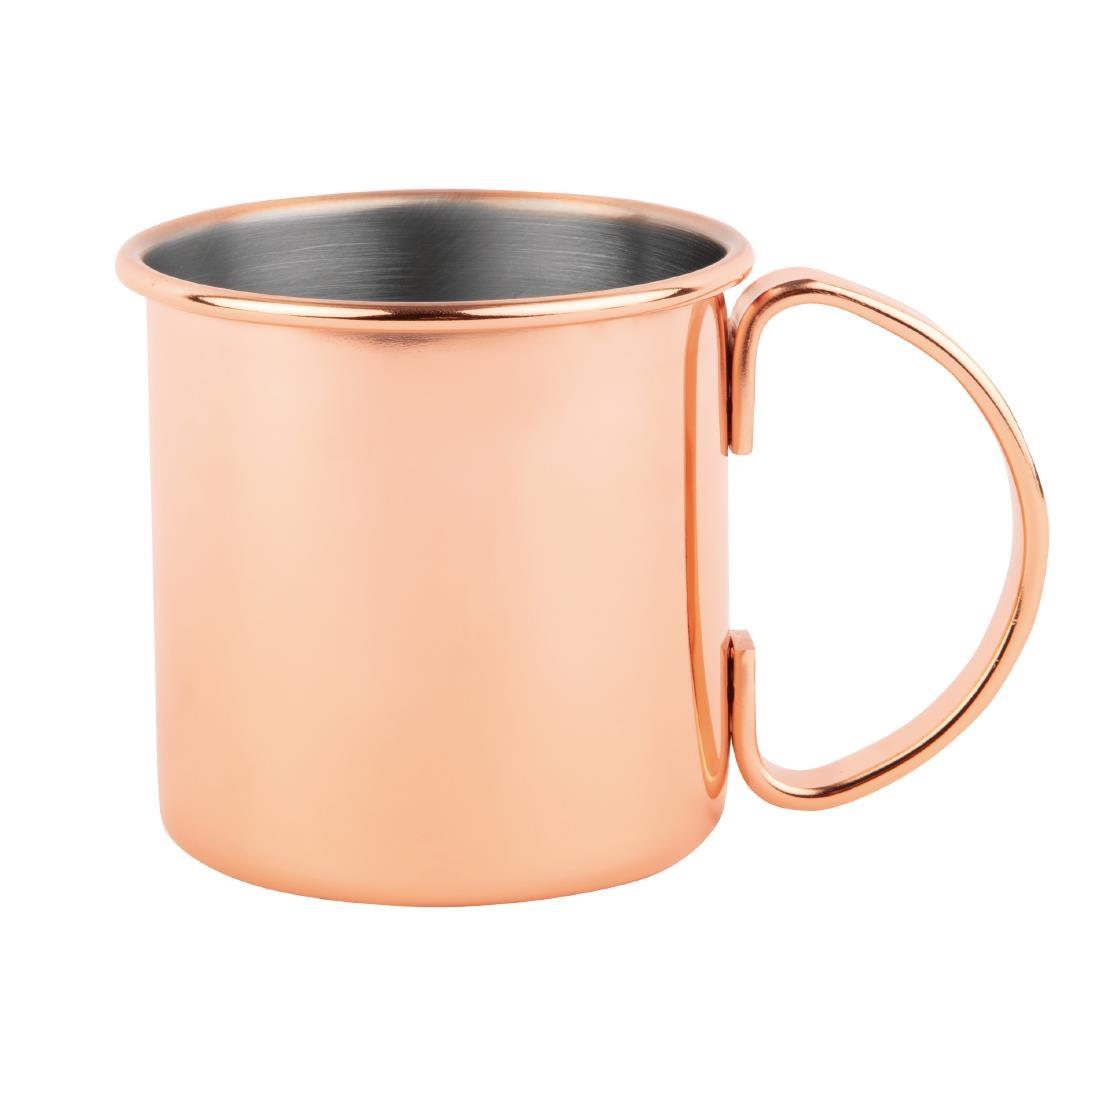 Olympia Metal Mug 500ml Copper - DR610  - 1